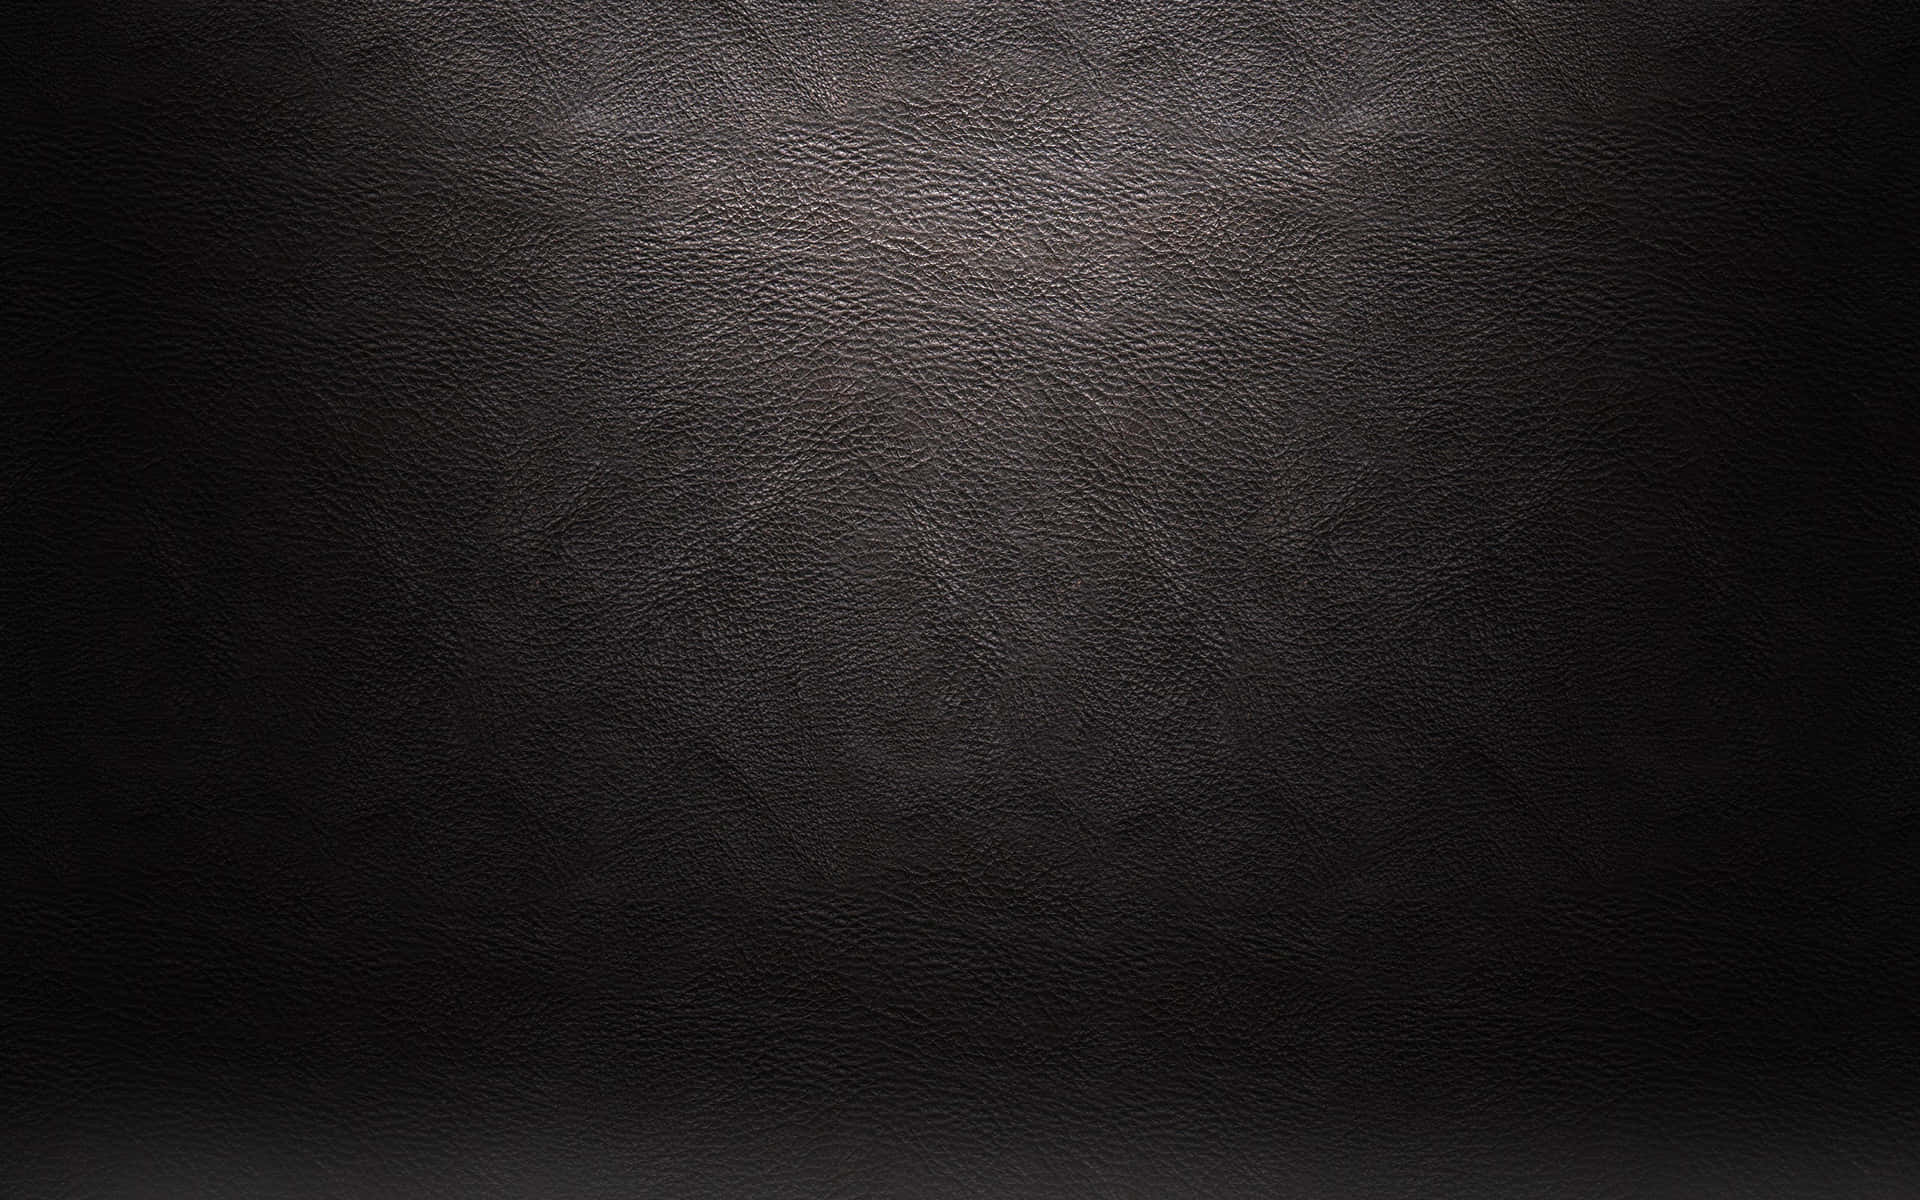 Klassisk læder baggrund med detaljeret syet detalje